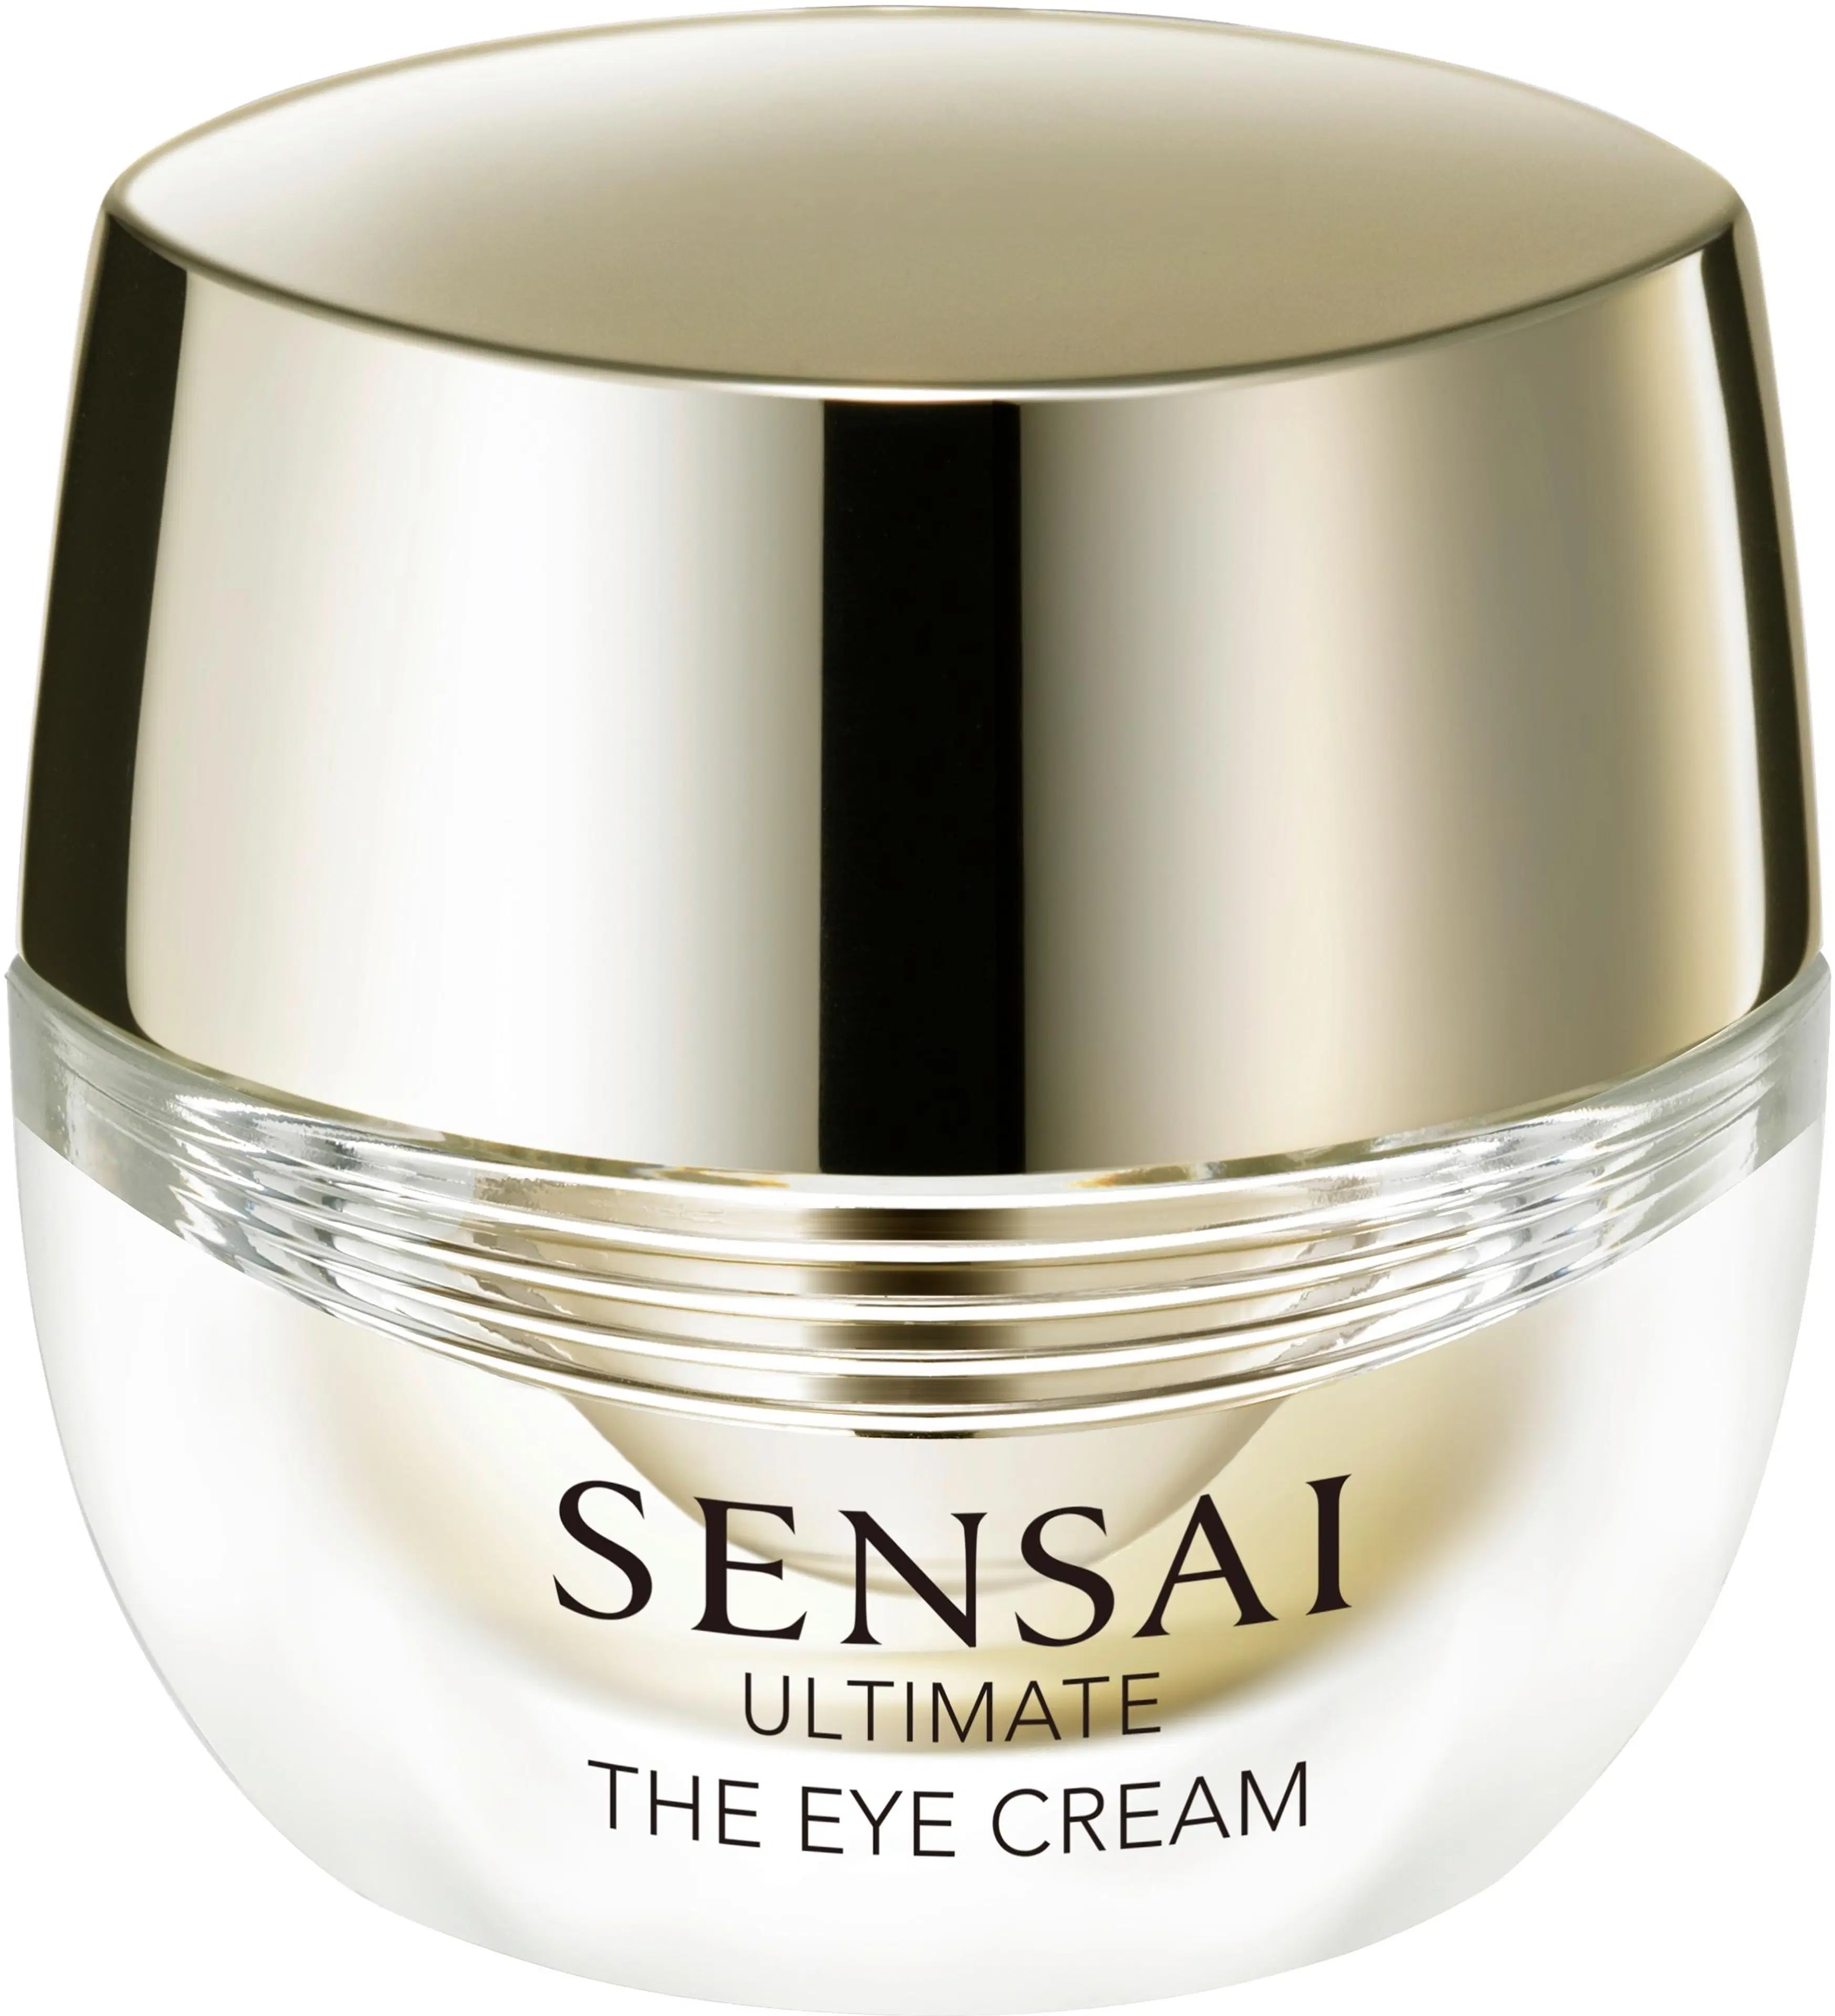 SENSAI Ultimate The Eye Cream silmänympärysvoide 15 ml